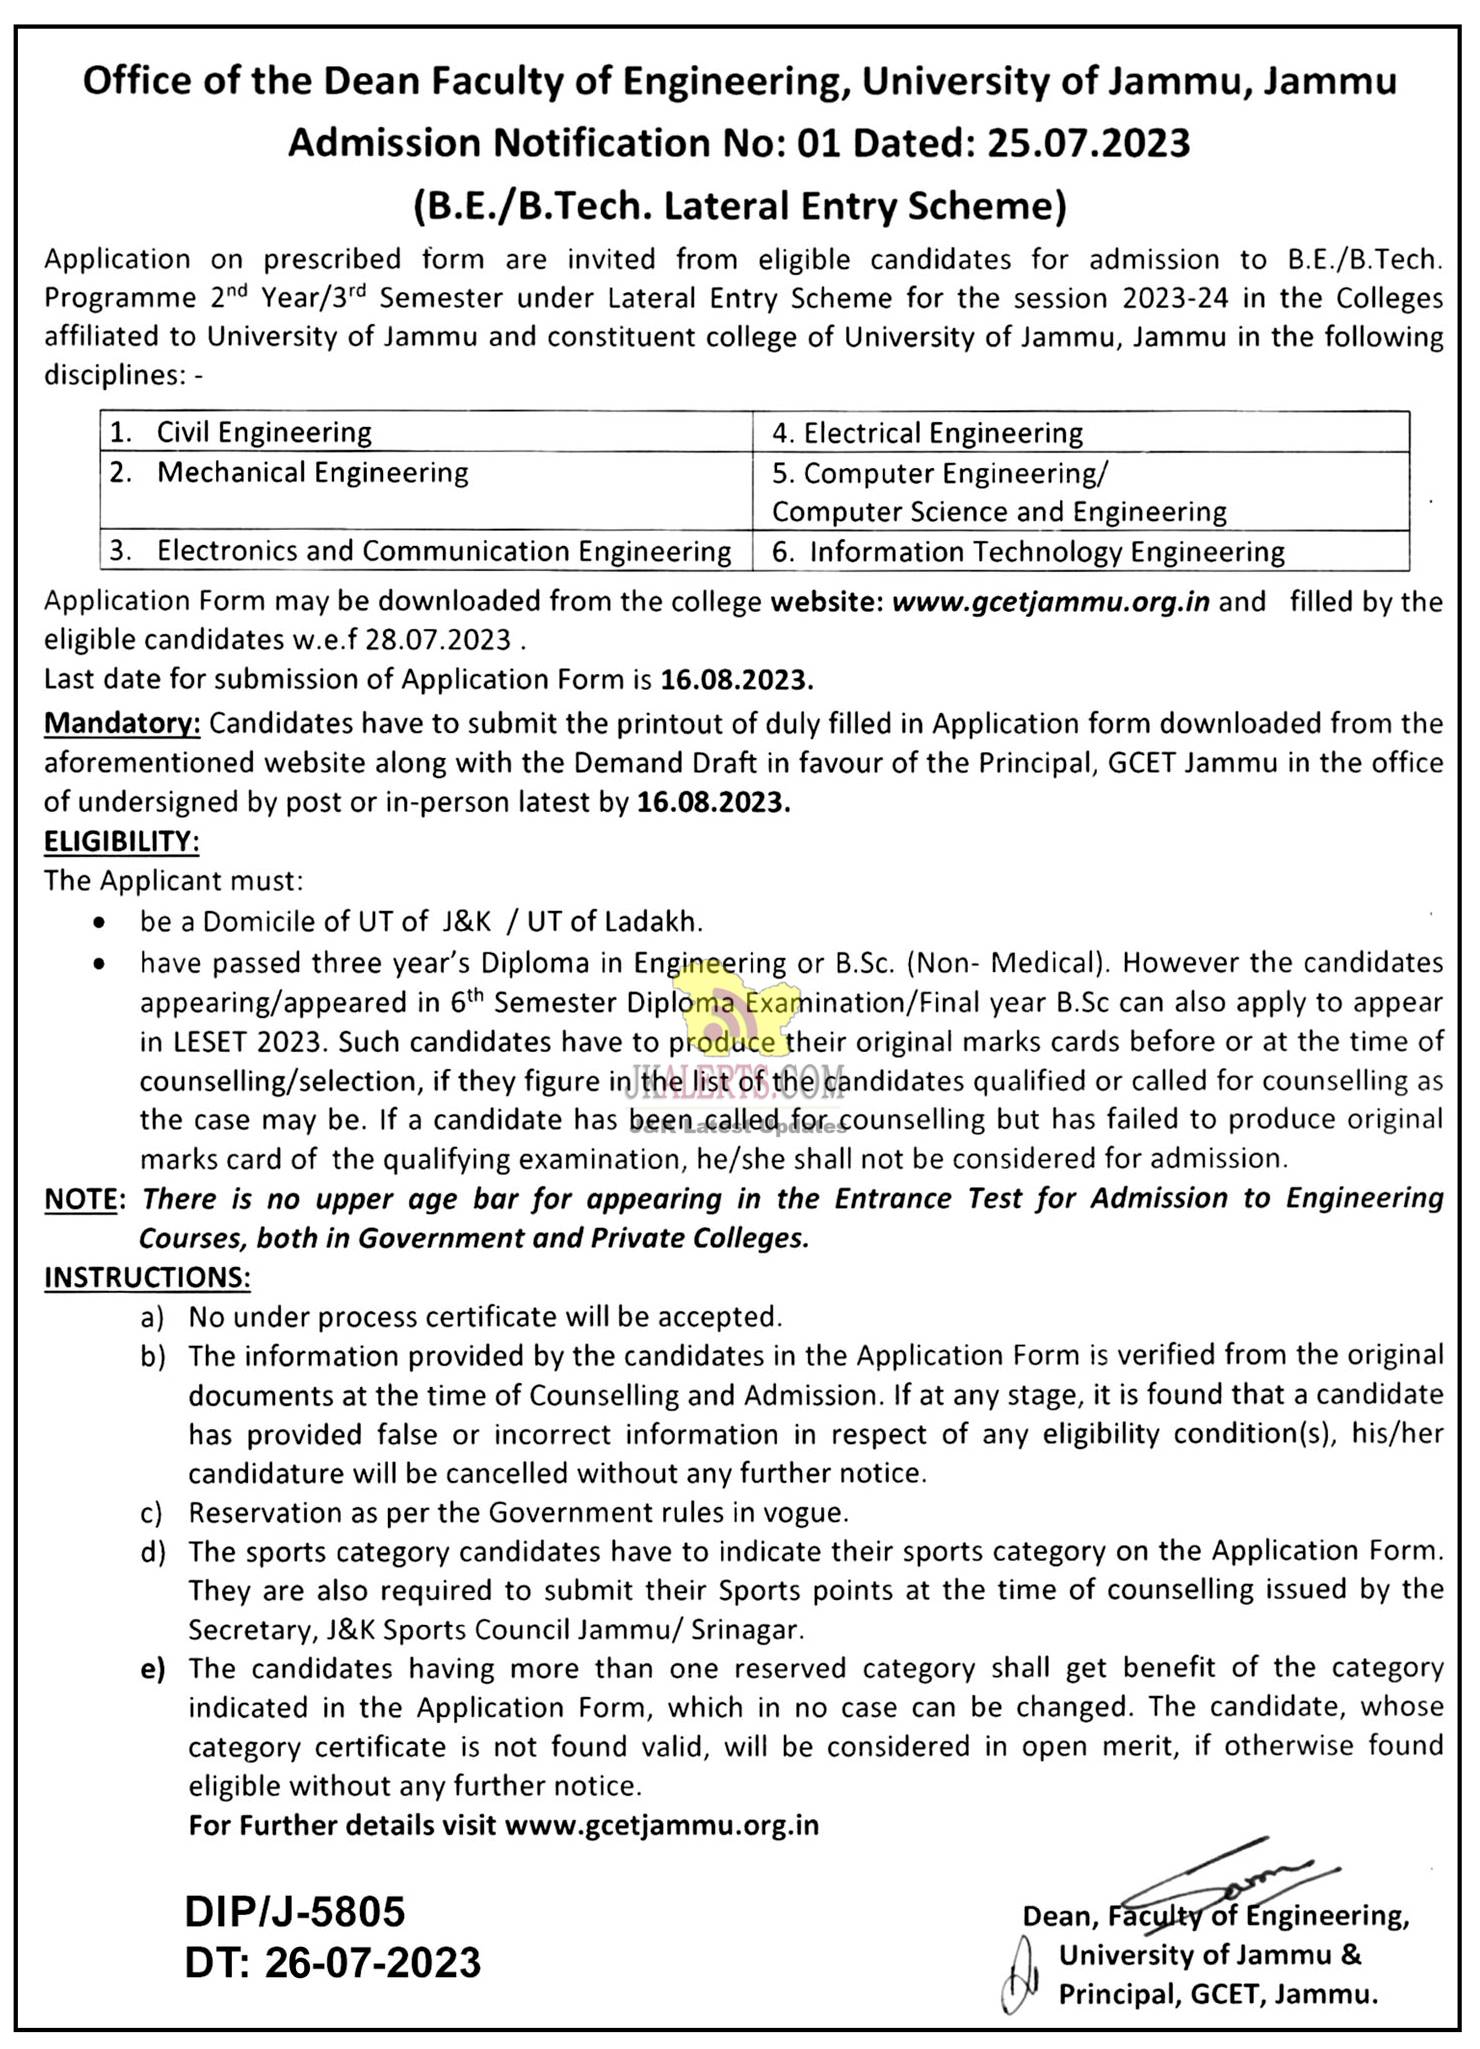 Jammu University Admission Notice for B.E.B.Tech. Programme.